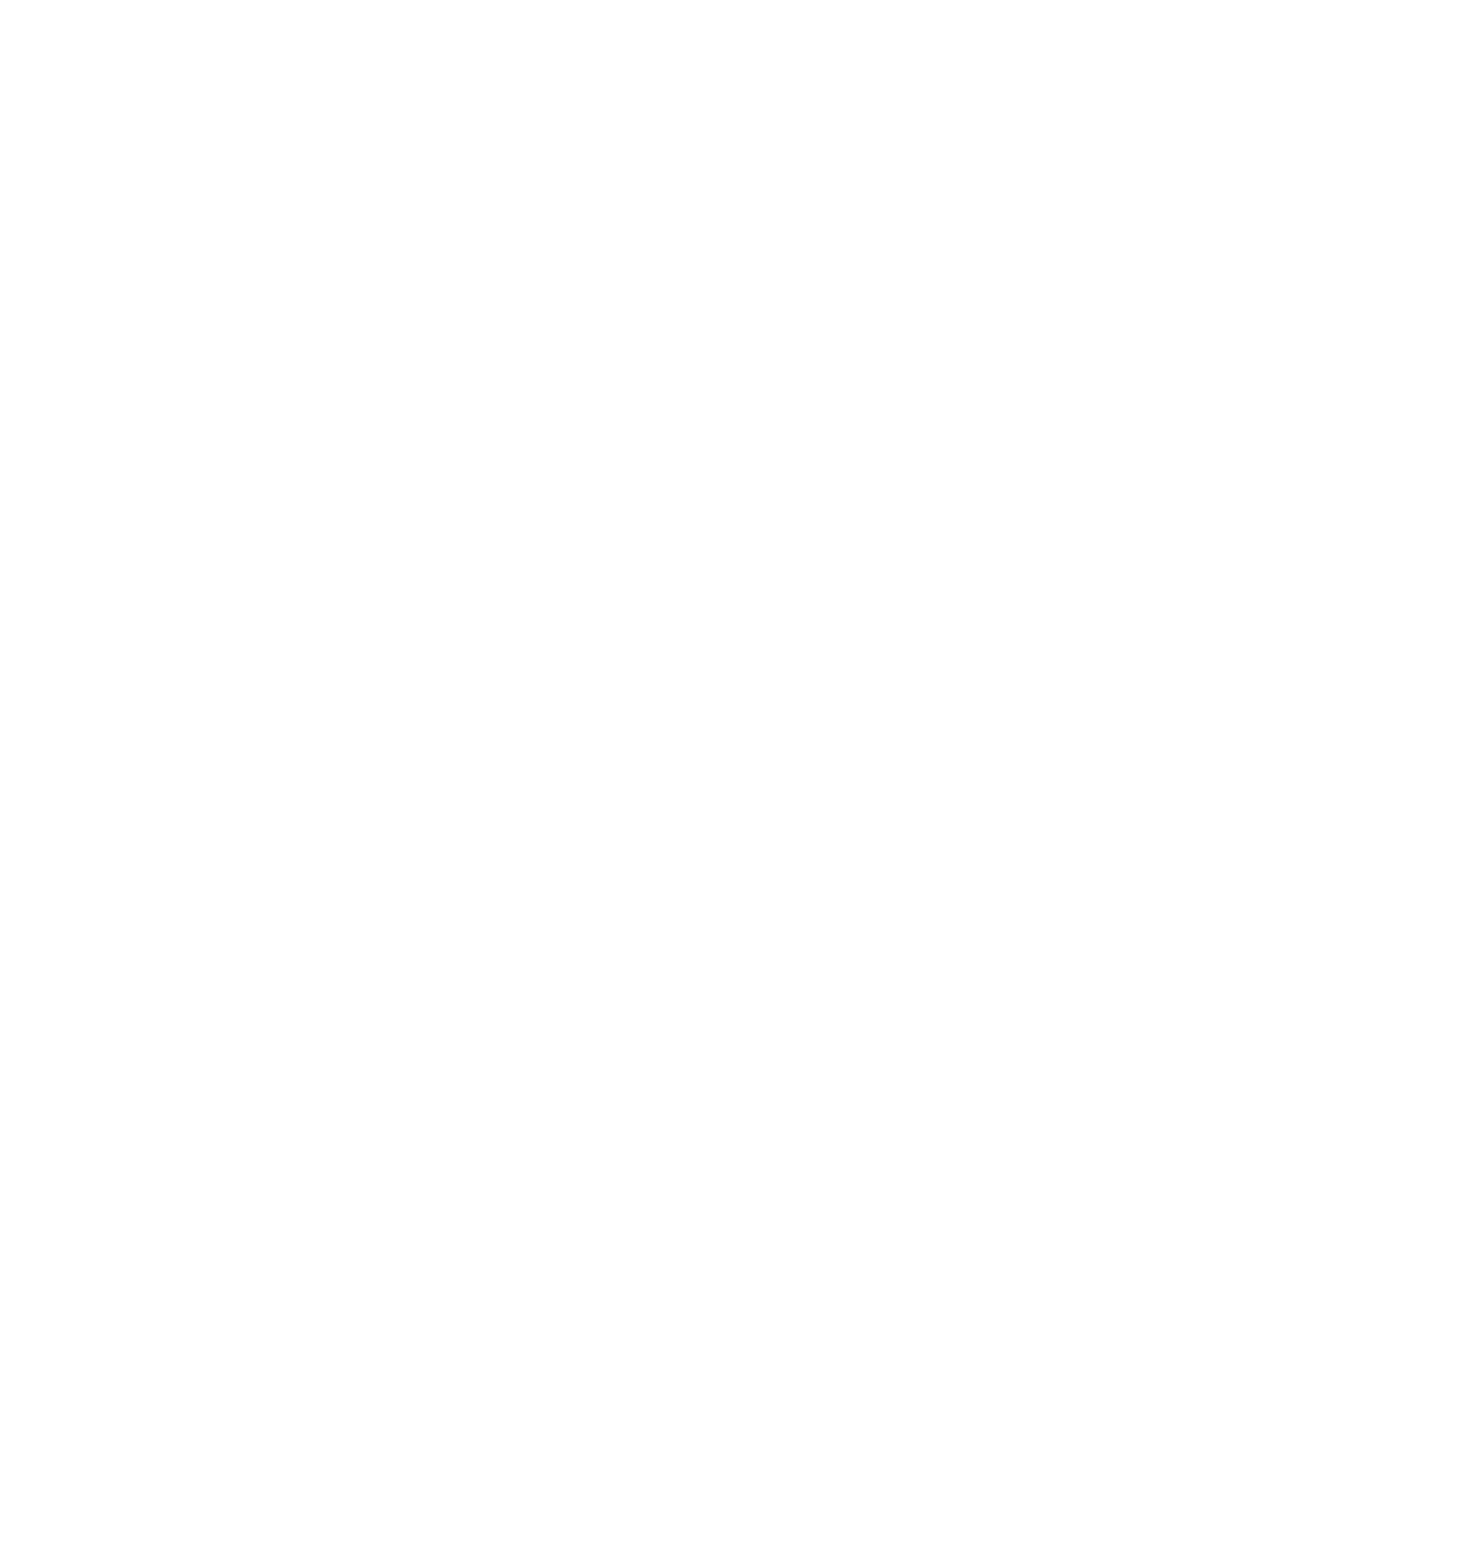 Bangkok Dusit Medical Services (BDMS) logo pour fonds sombres (PNG transparent)